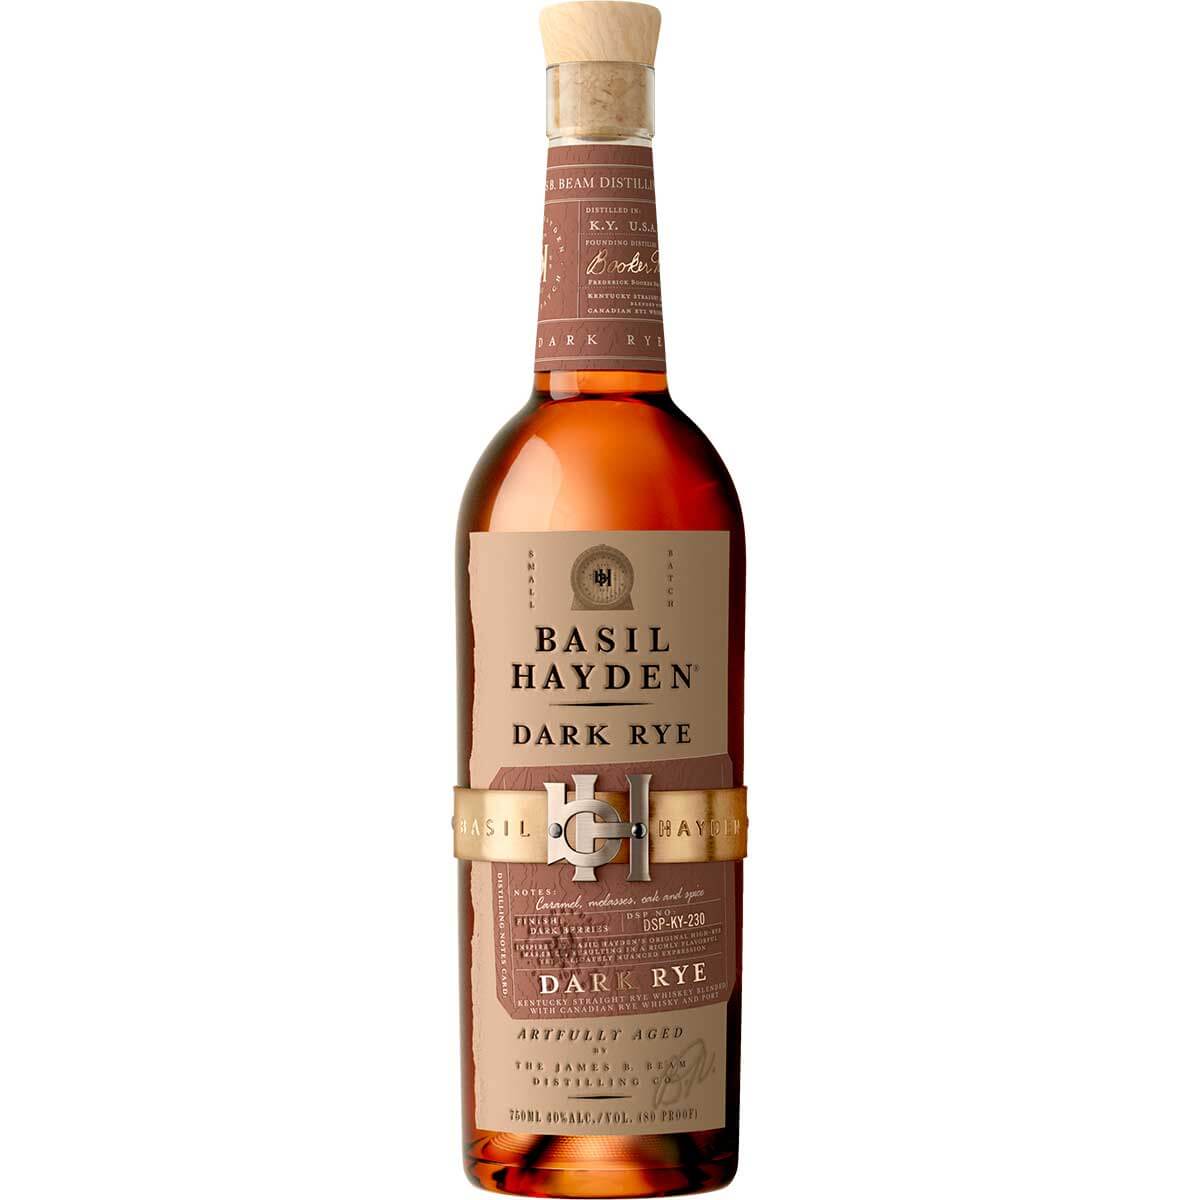 Basil Hayden Dark Rye bottle